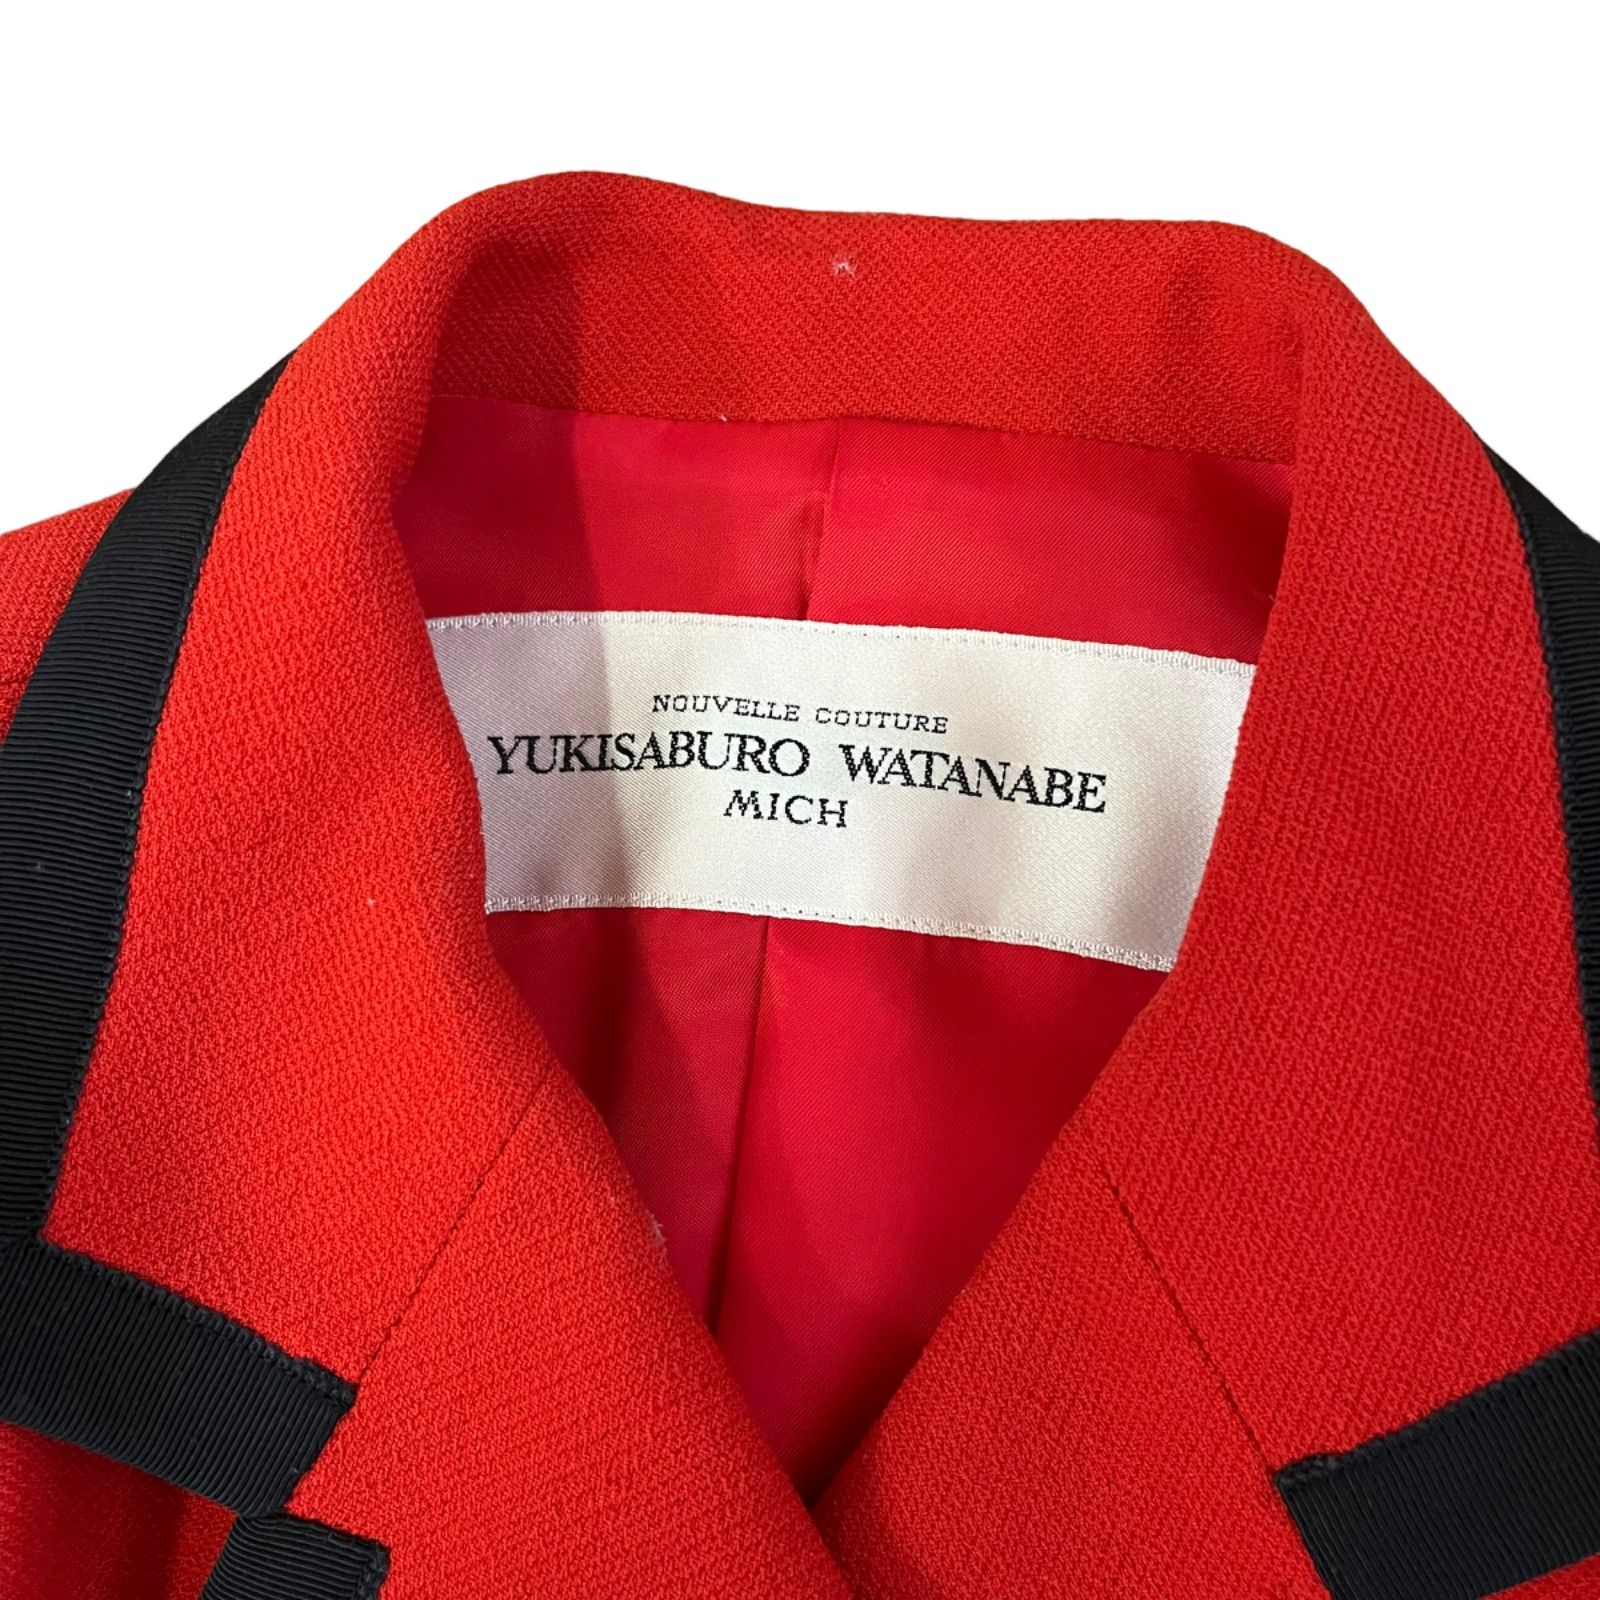 www.haoming.jp - YUKISABURO WATANABE nouvelle couture 価格比較